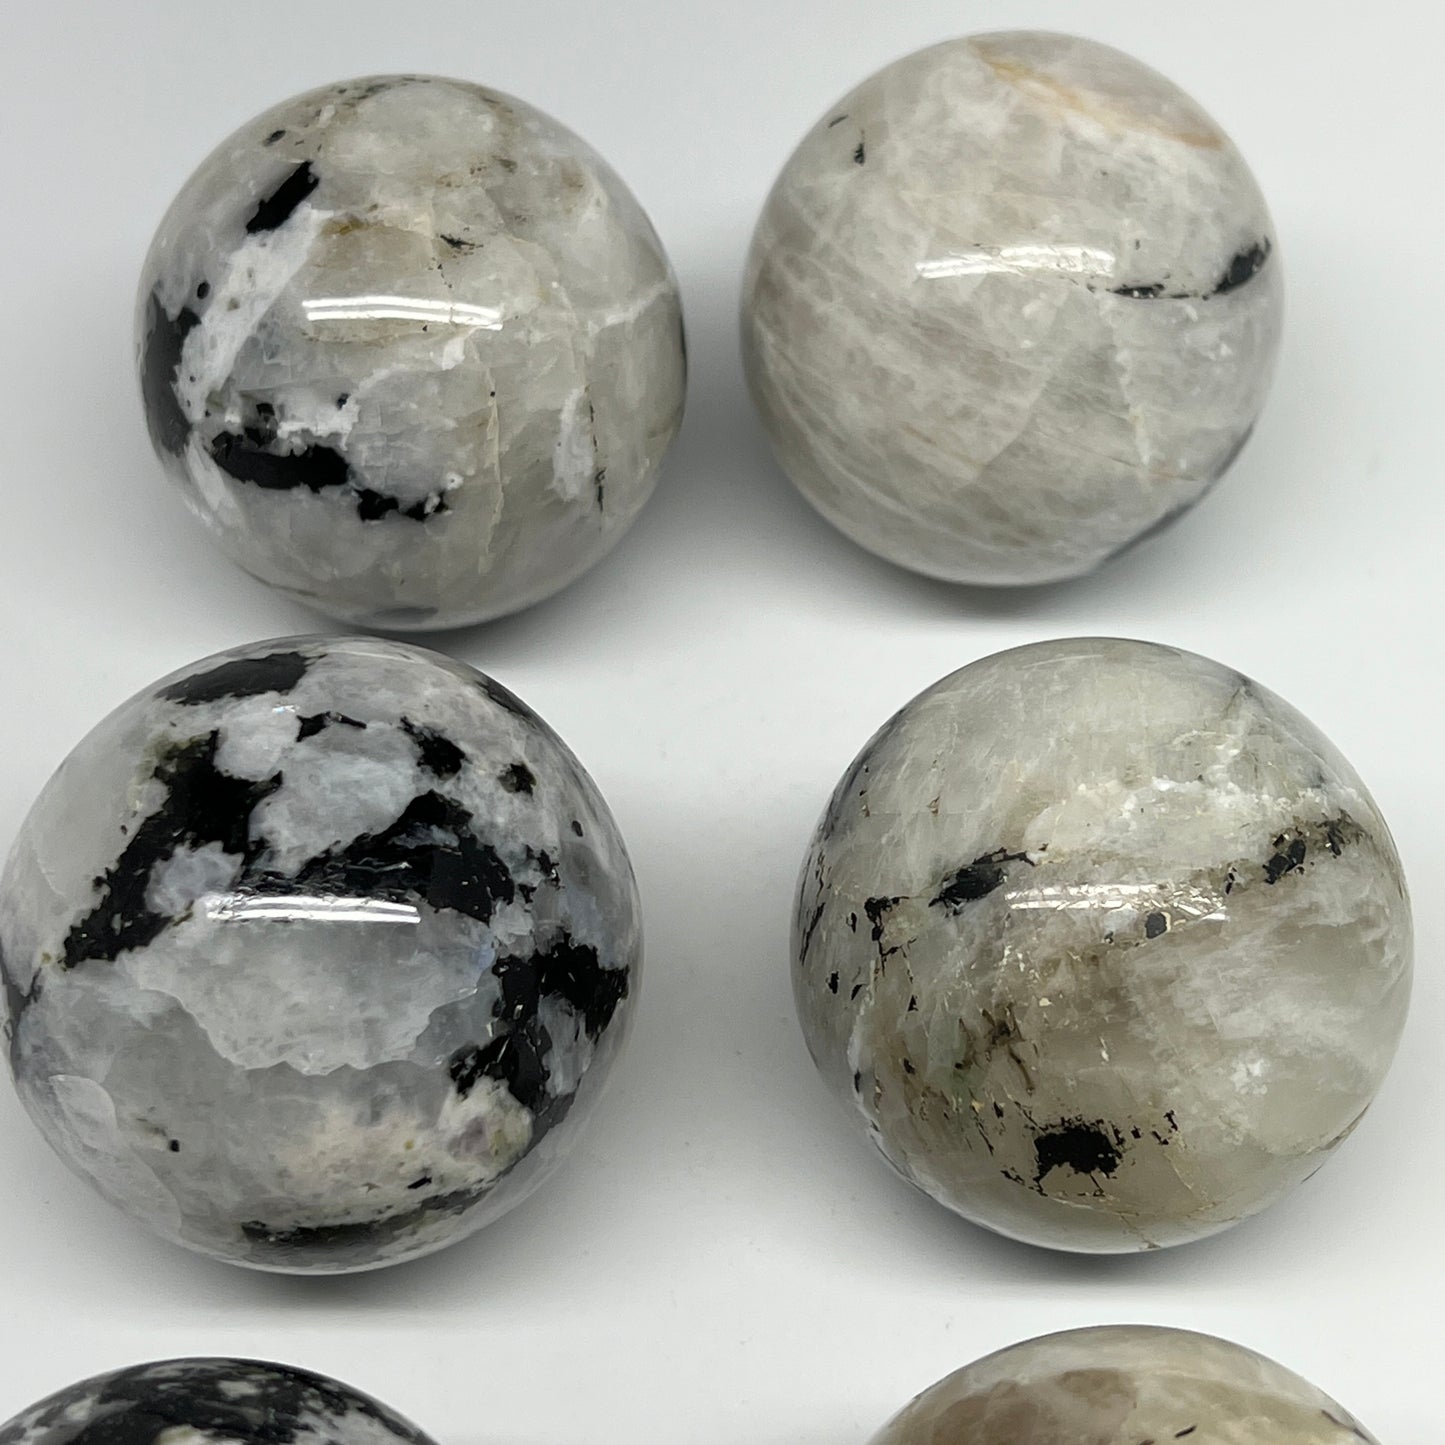 1005g, 1.8" - 2", 6pcs, Rainbow Moonstone Spheres Gemstones @India, B21426